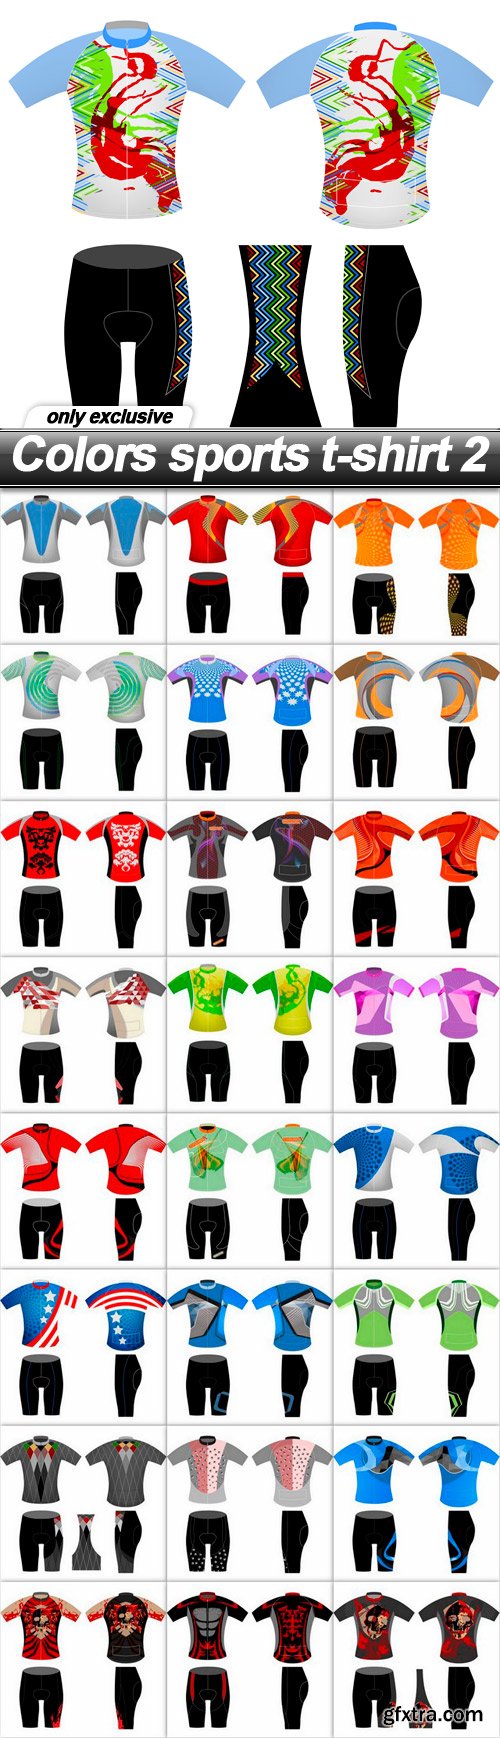 Colors sports t-shirt 2 - 25 EPS